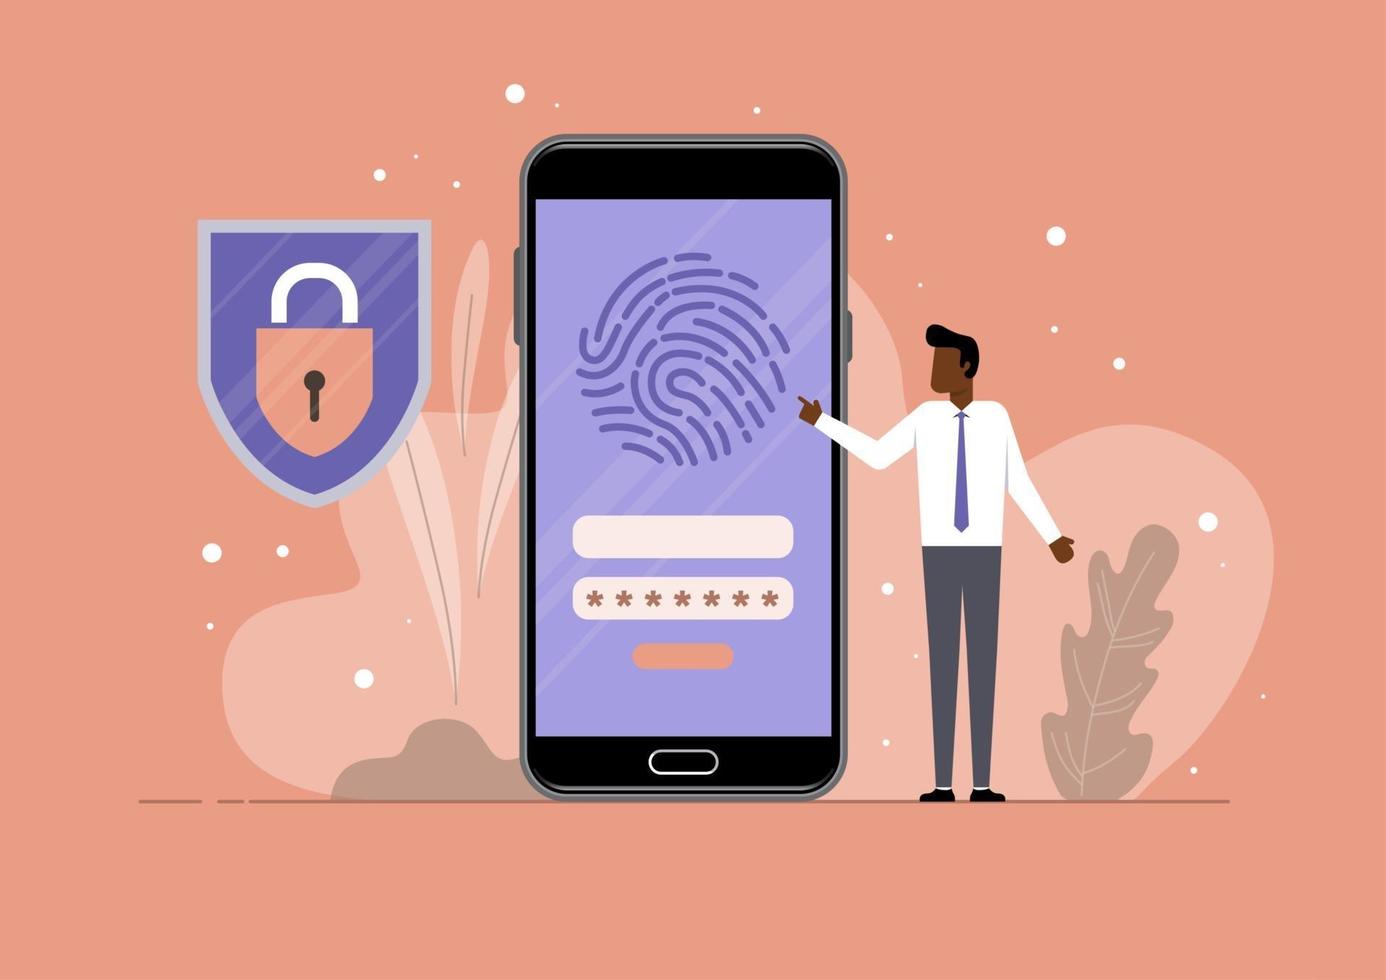 Mobile fingerprint security protection vector